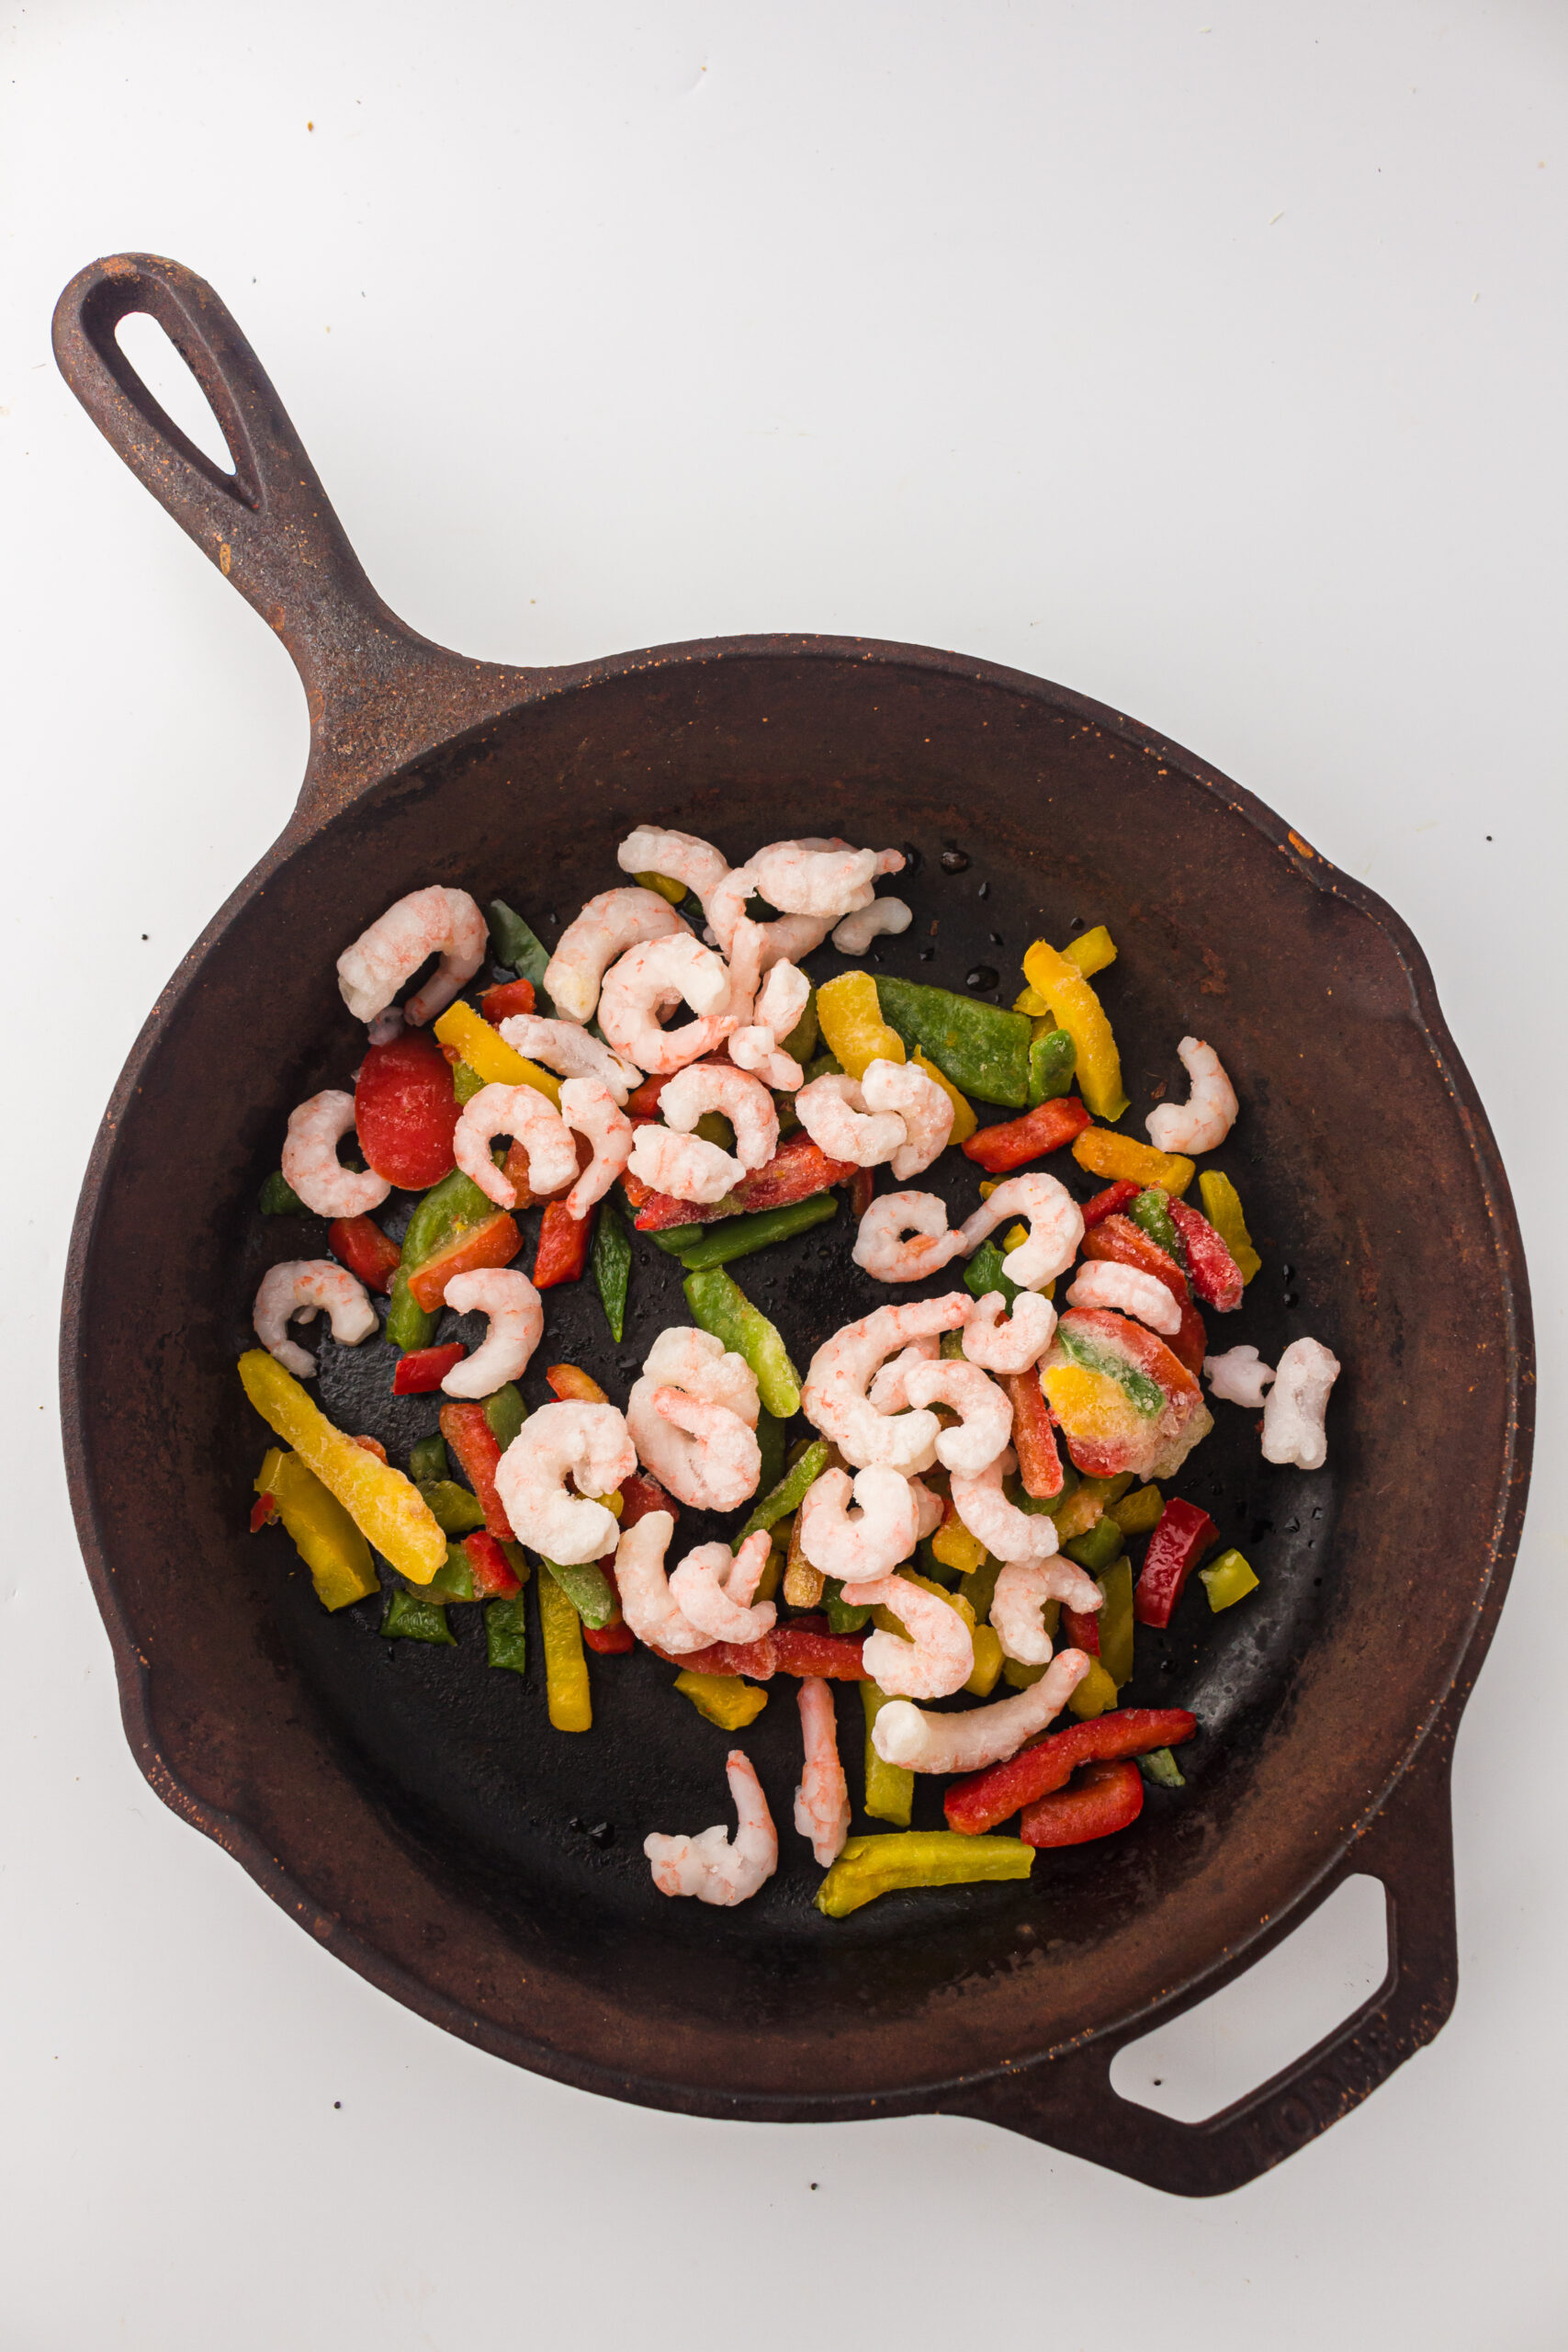 Shrimp and vegetables cooking 